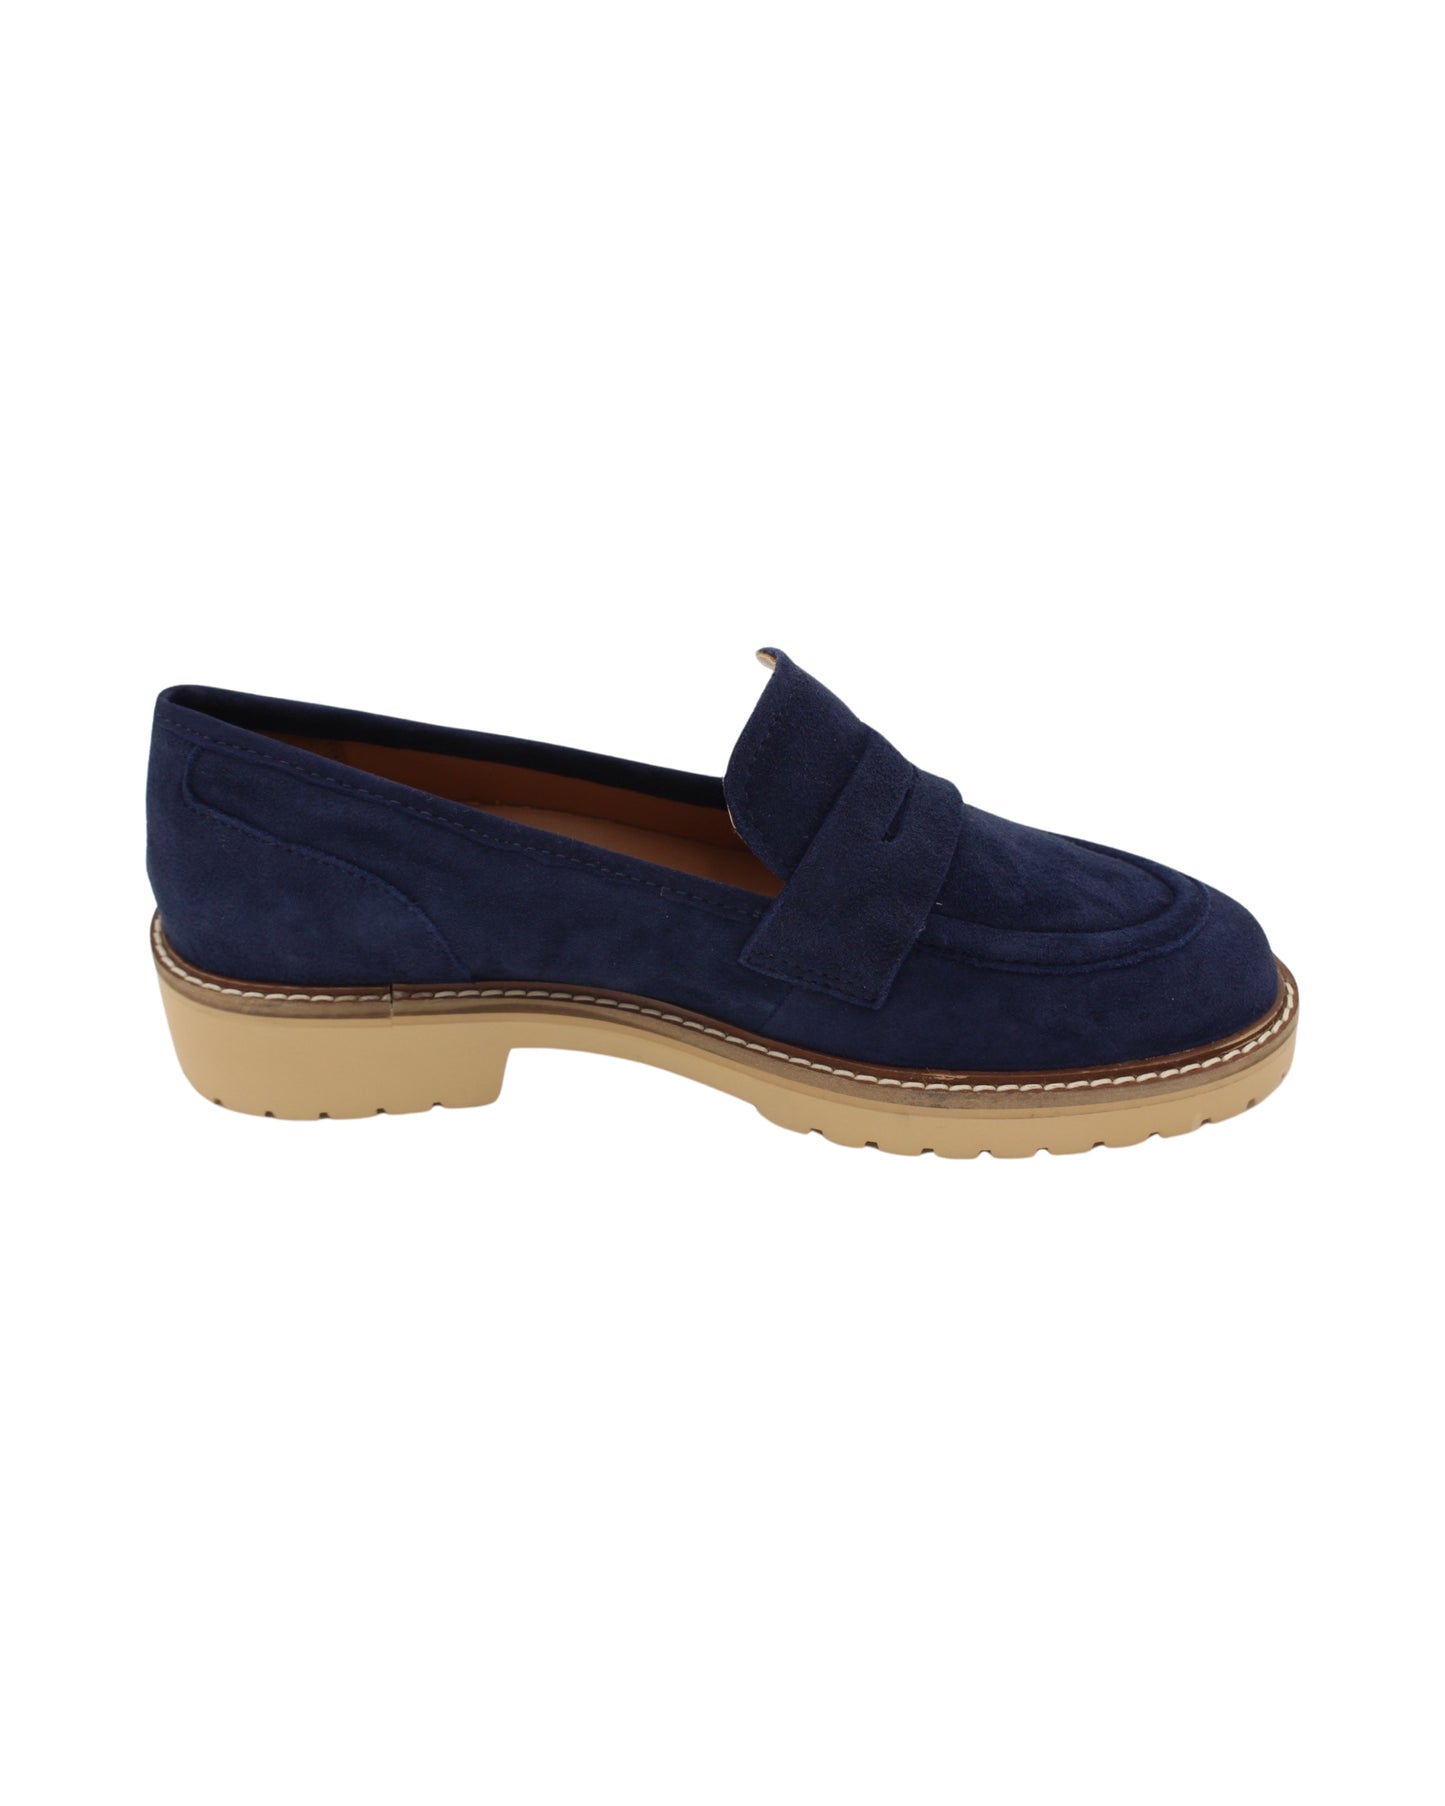 Bagatt - Ladies Shoes Loafers Navy (2258)